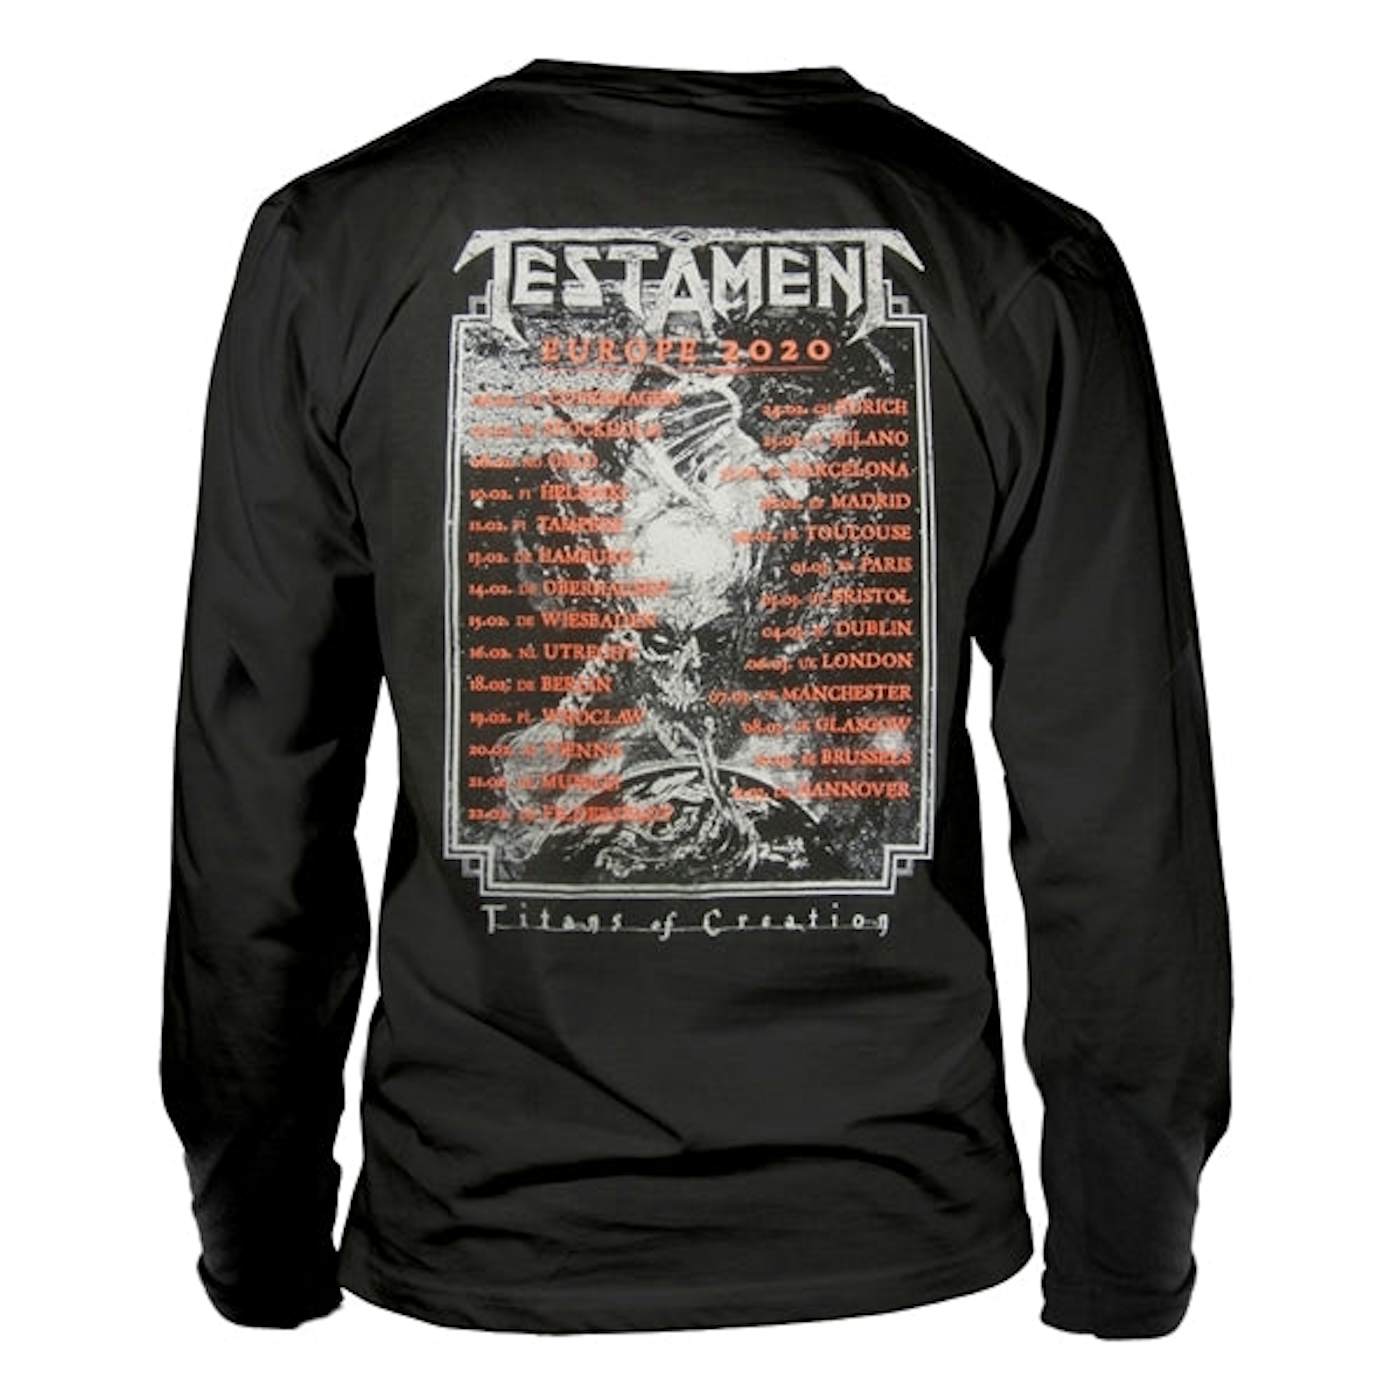 Testament Long Sleeve T Shirt - Titans Of Creation (Grey) Europe 2020 Tour